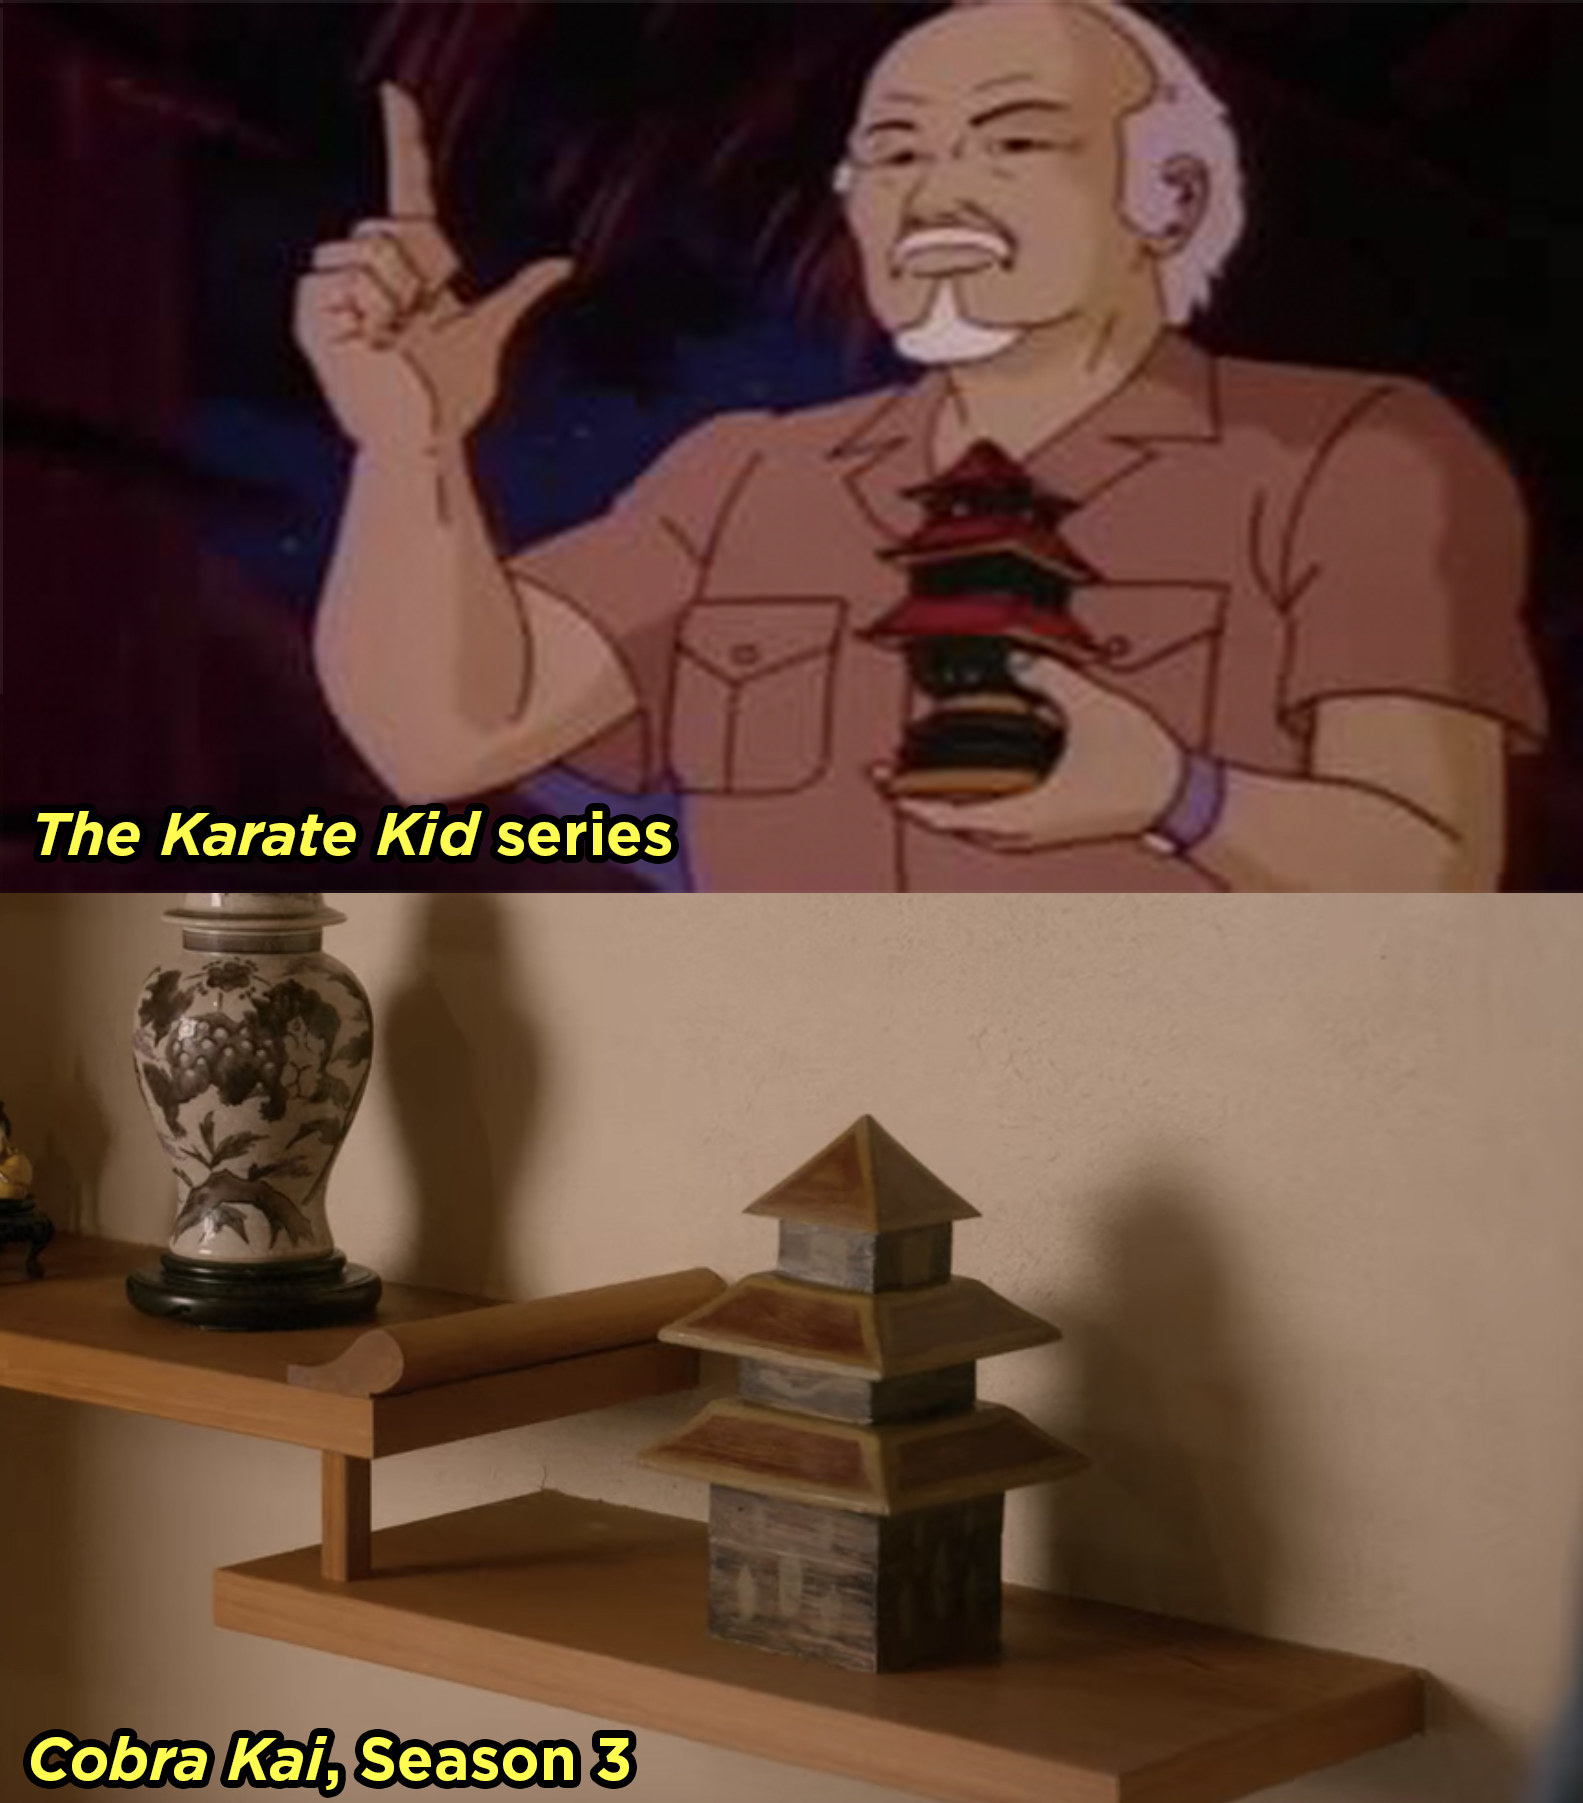 The shrine from the animated series vs the shrine from Cobra Kai